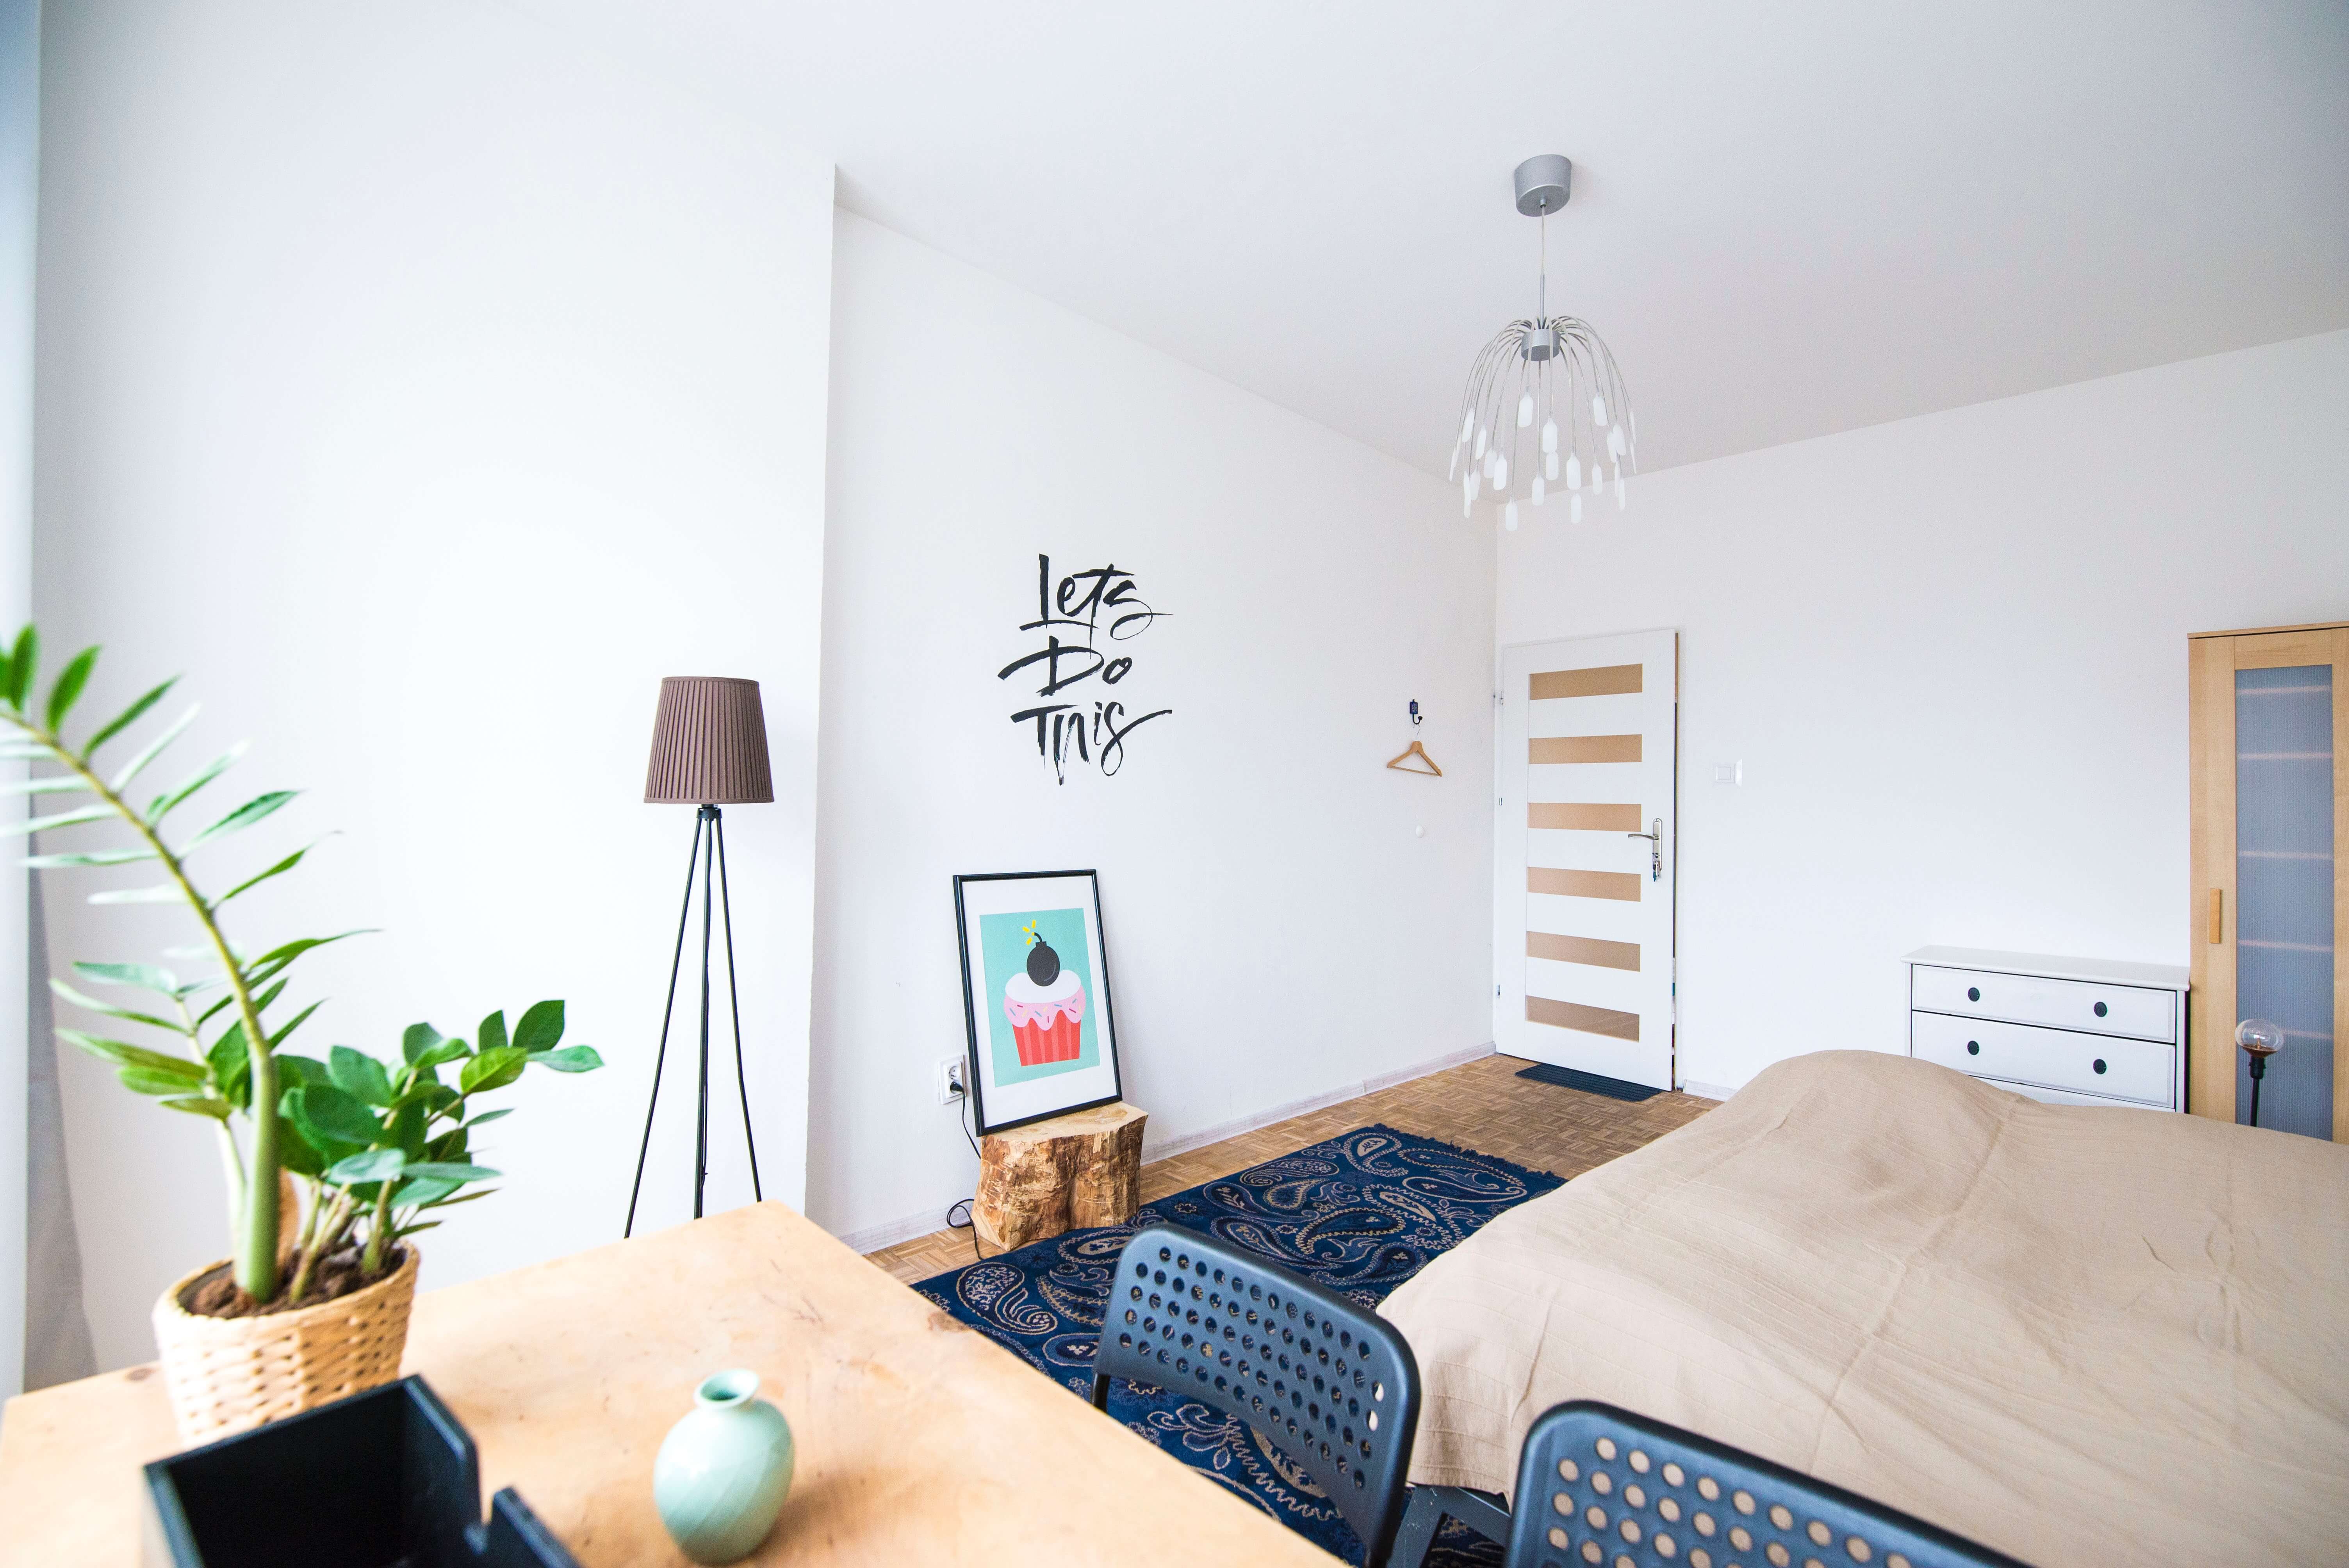 3 Bedroom House Designs,Layout Landscape Design Drawing Templates